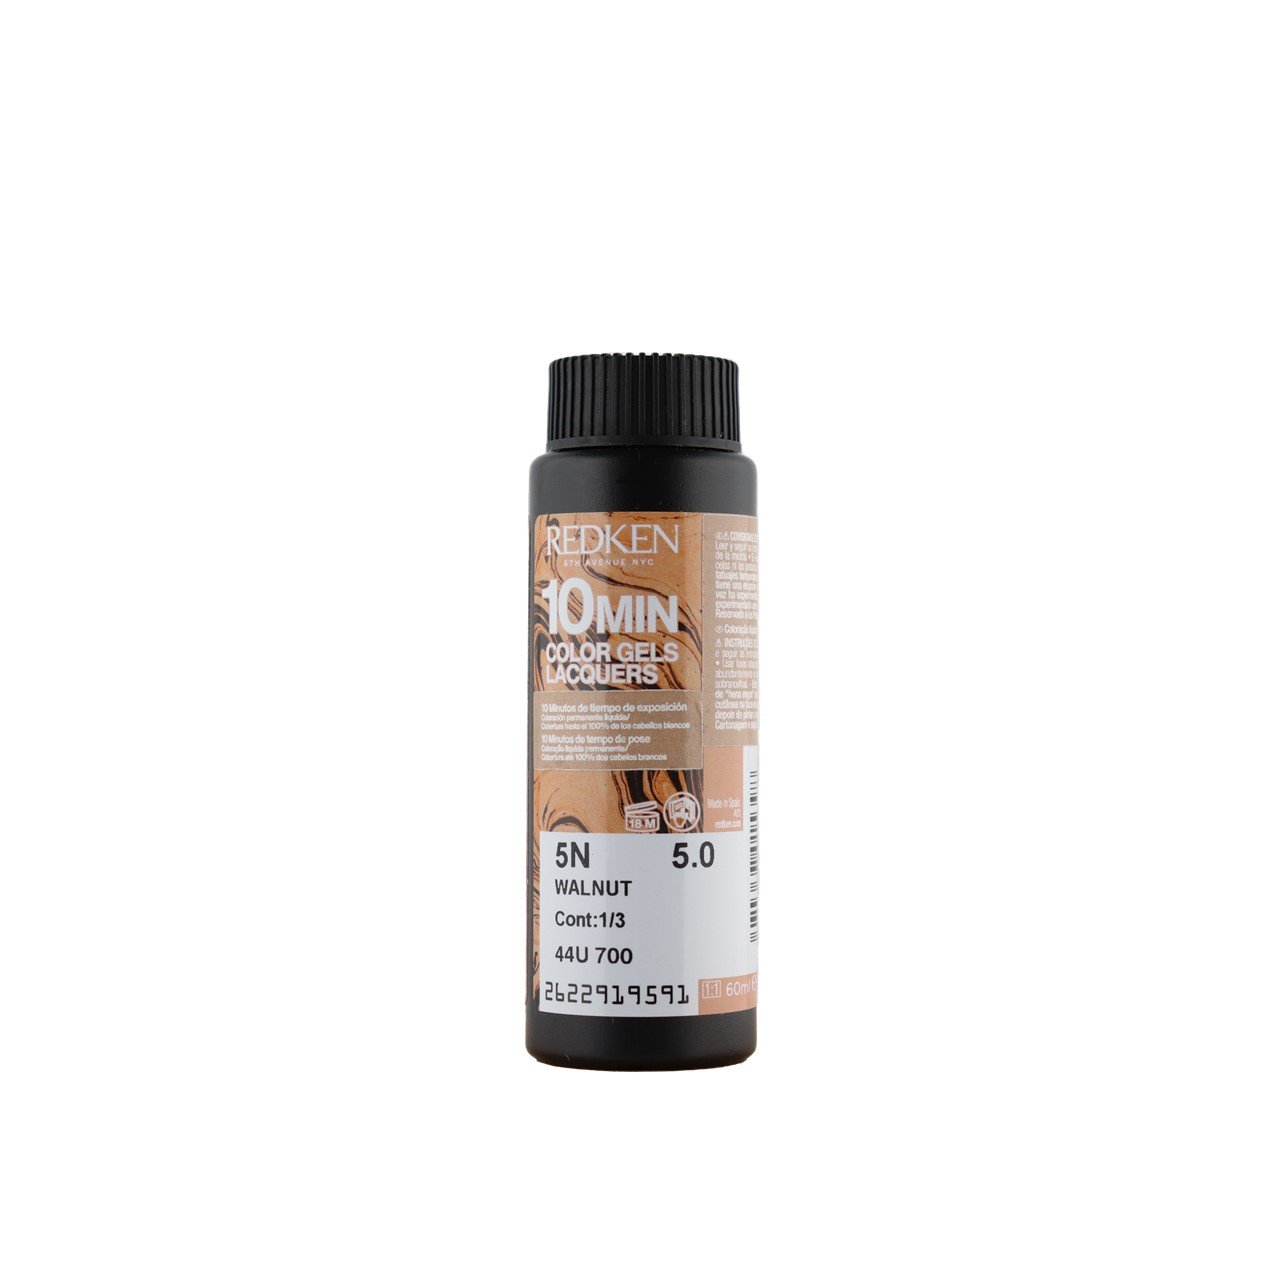 Redken Color Gels Lacquers 10 Minute 5N Walnut Permanent Hair Dye 60ml (2.03fl oz)